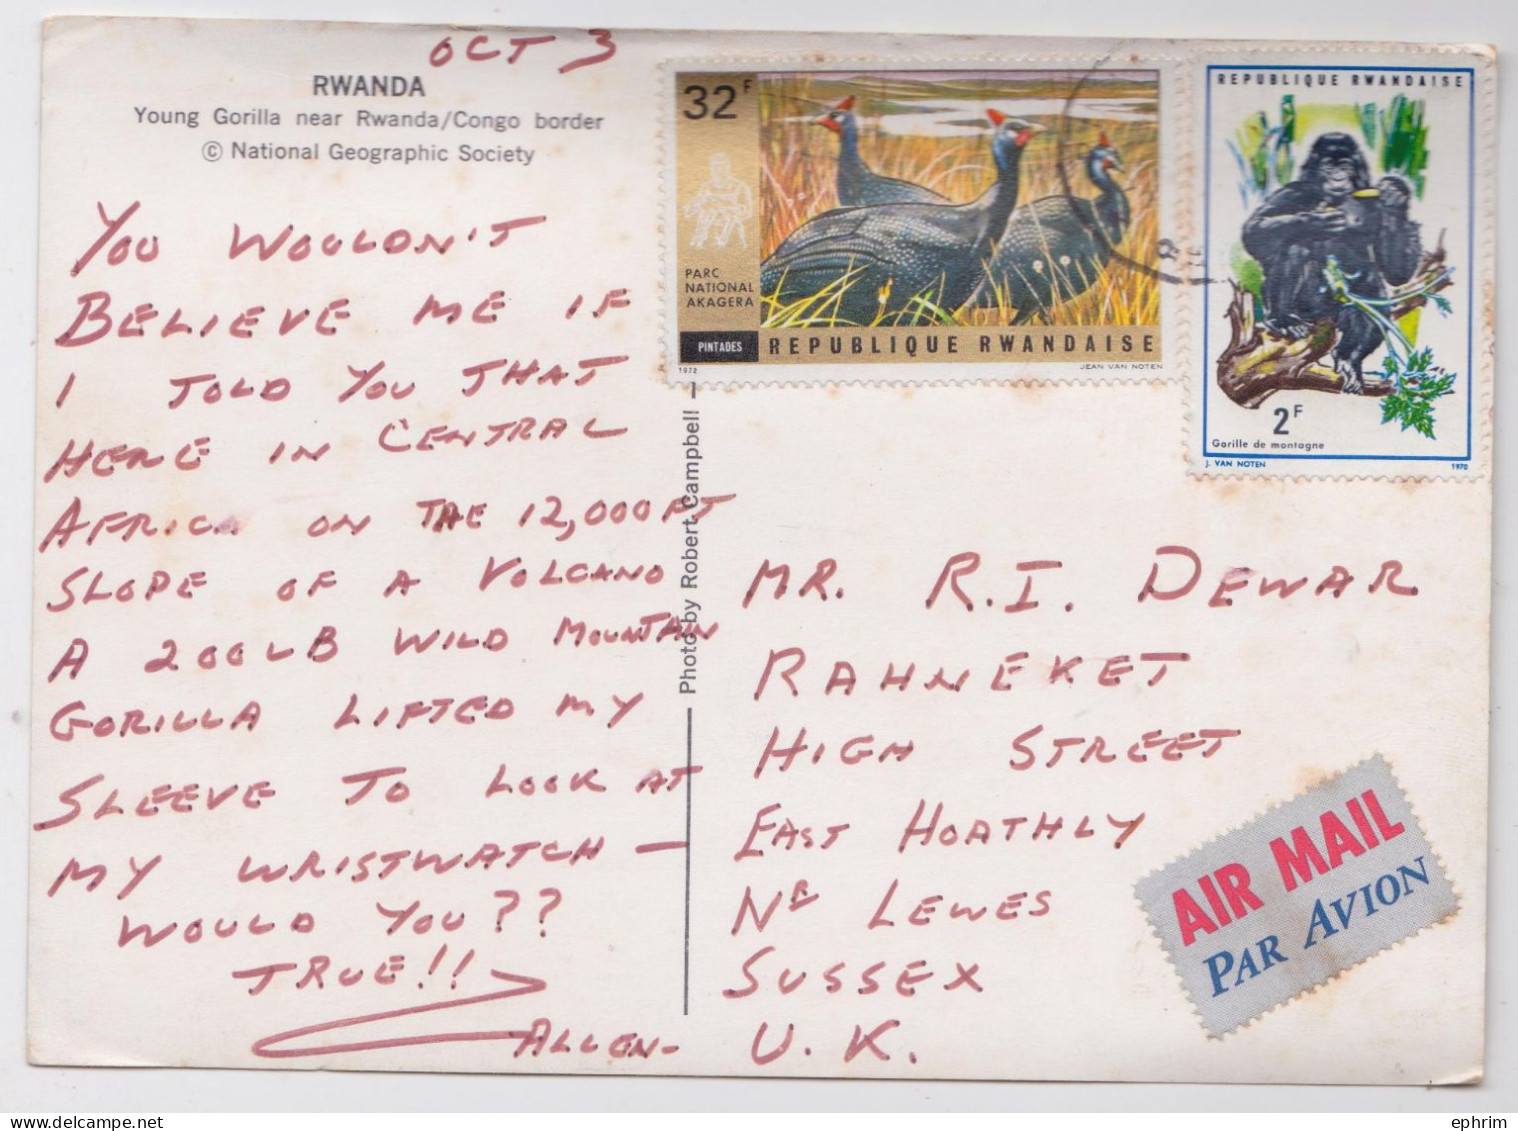 Rwanda Ruanda Carte Postale Timbre Parc National Gorille Gorilla Stamp 1970 Air Mail Postcard - Storia Postale